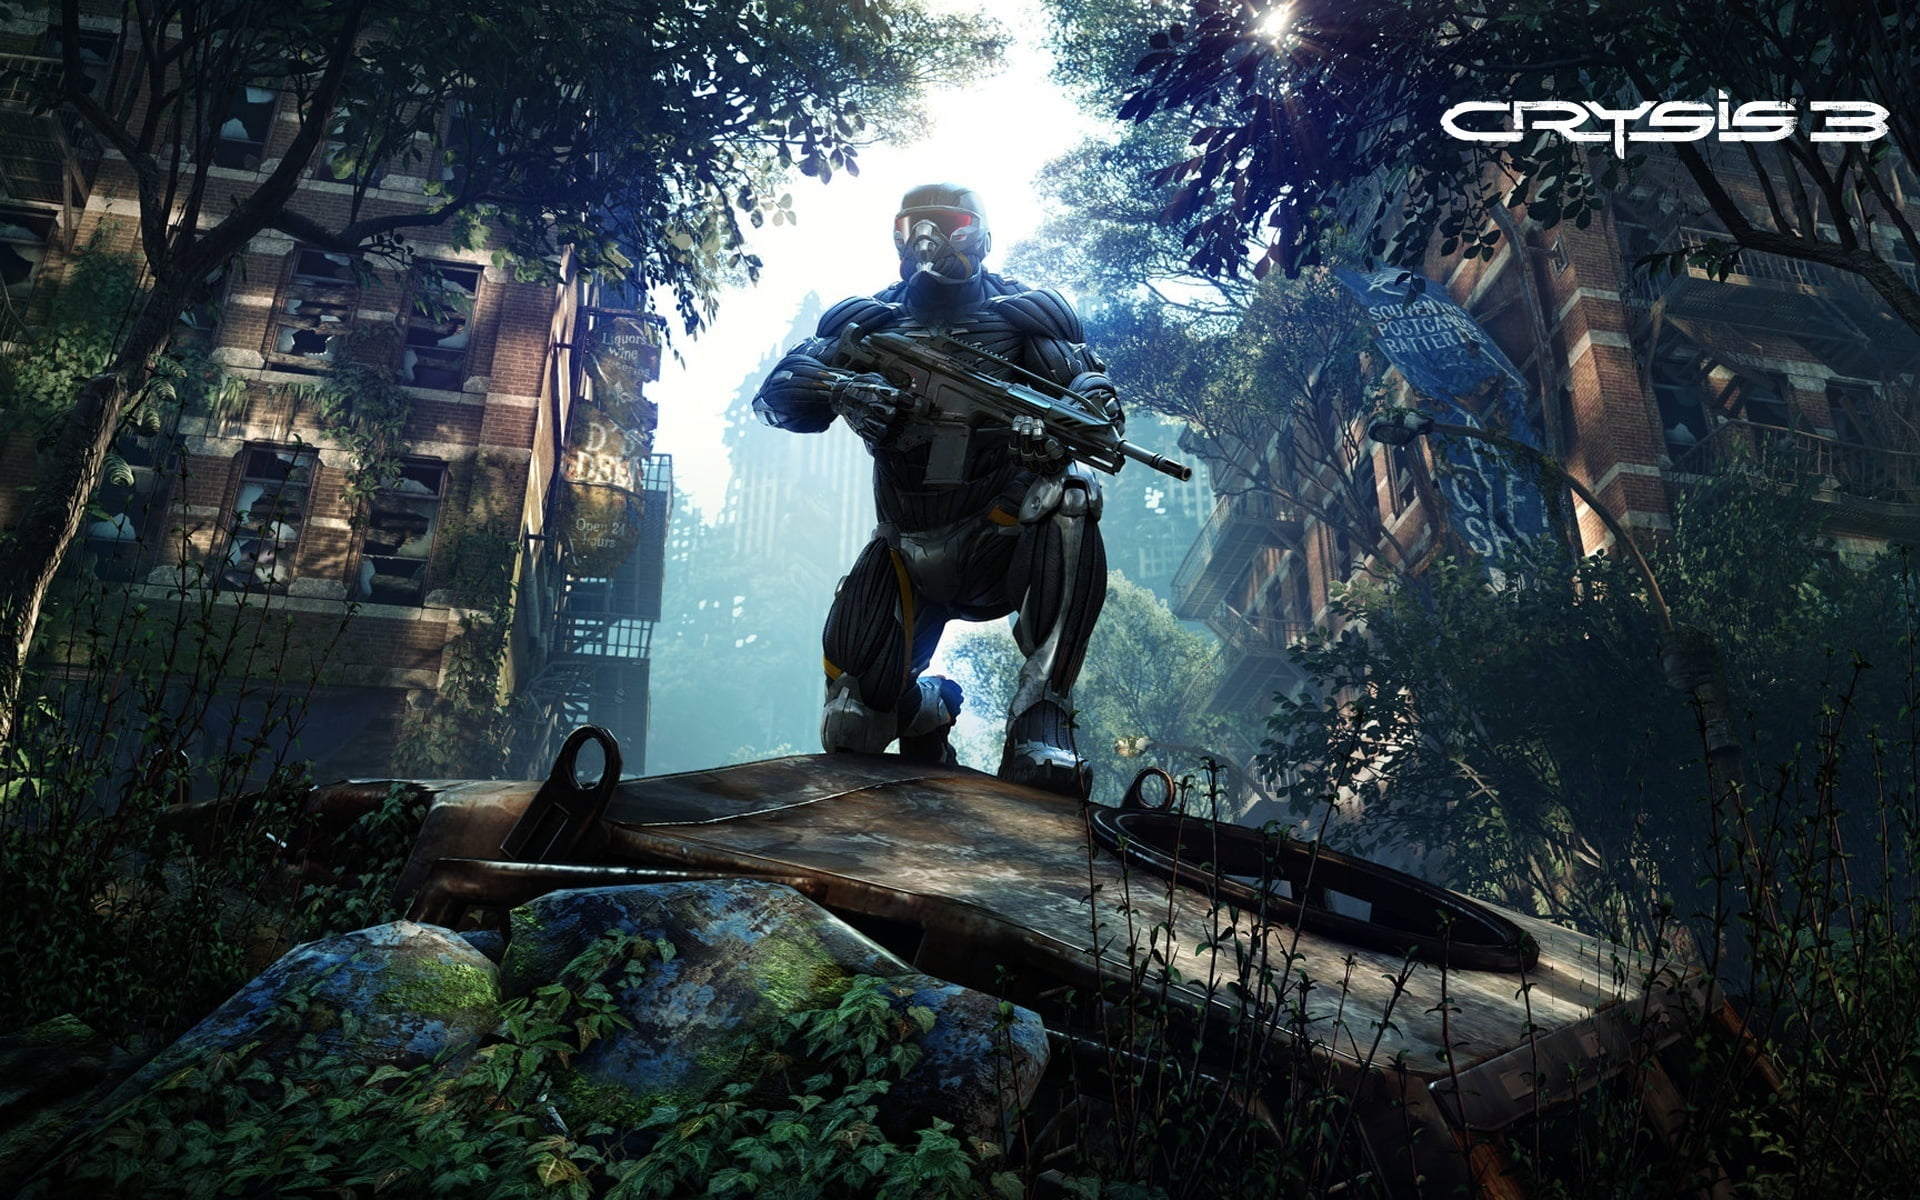 Crysis 3 digital wallpaper, trees, weapons, New York, rust, soldiers